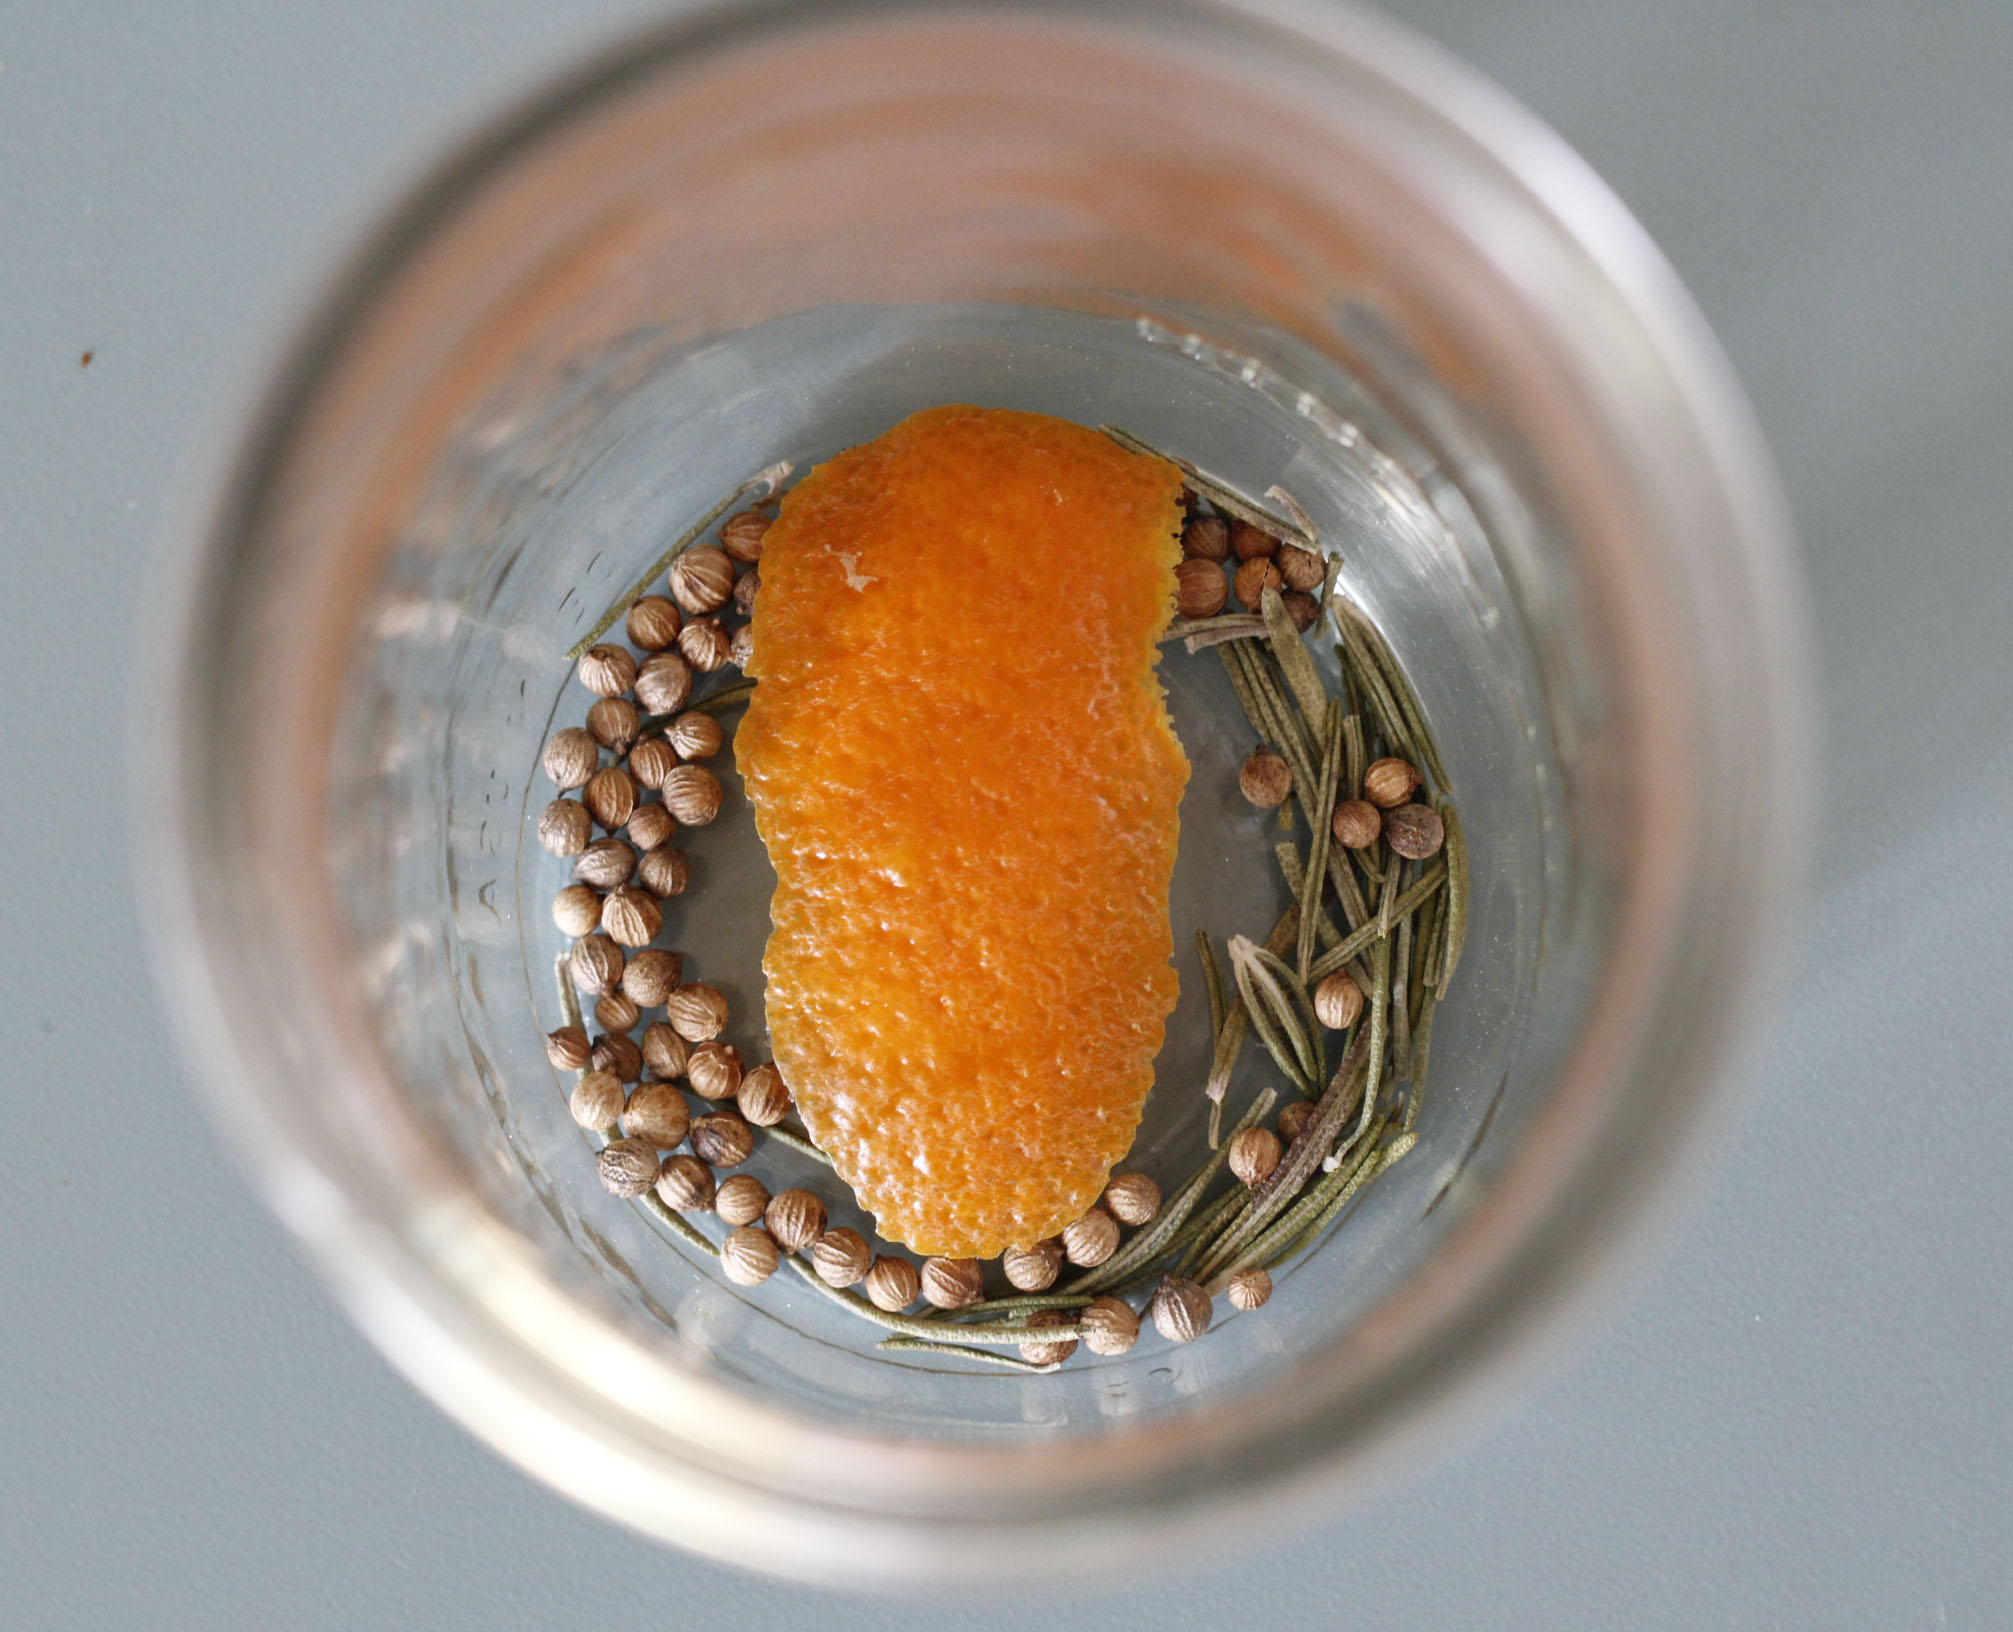 Rosemary, coriander, and orange peels in a Mason Jar for pickling Kohlrabi. 